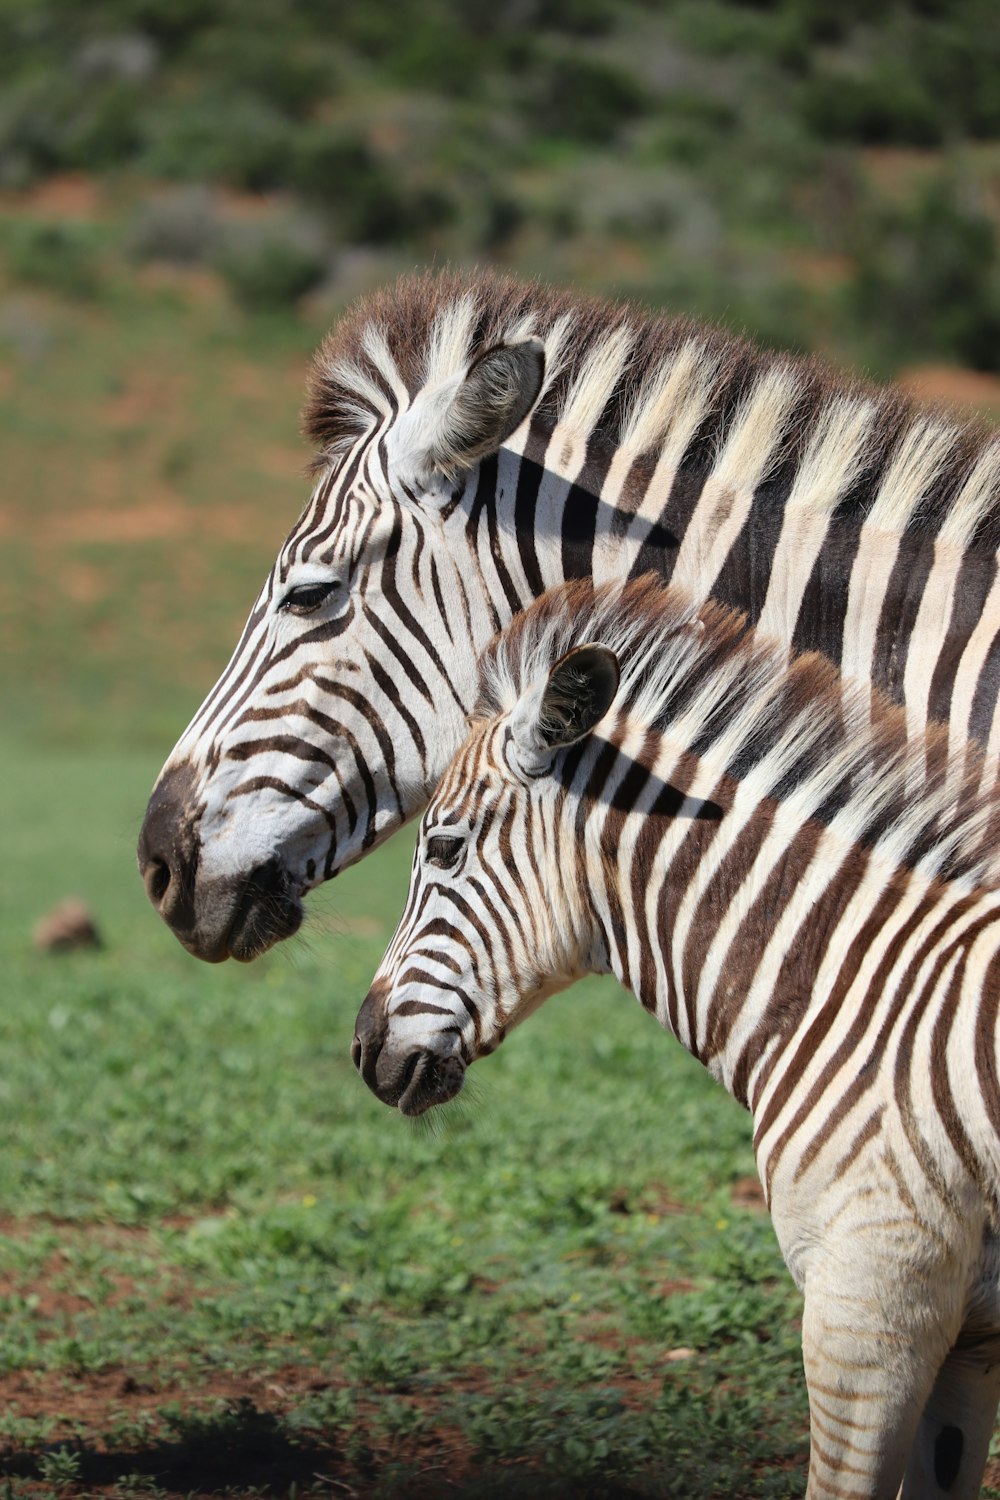 zebra standing on green grass during daytime